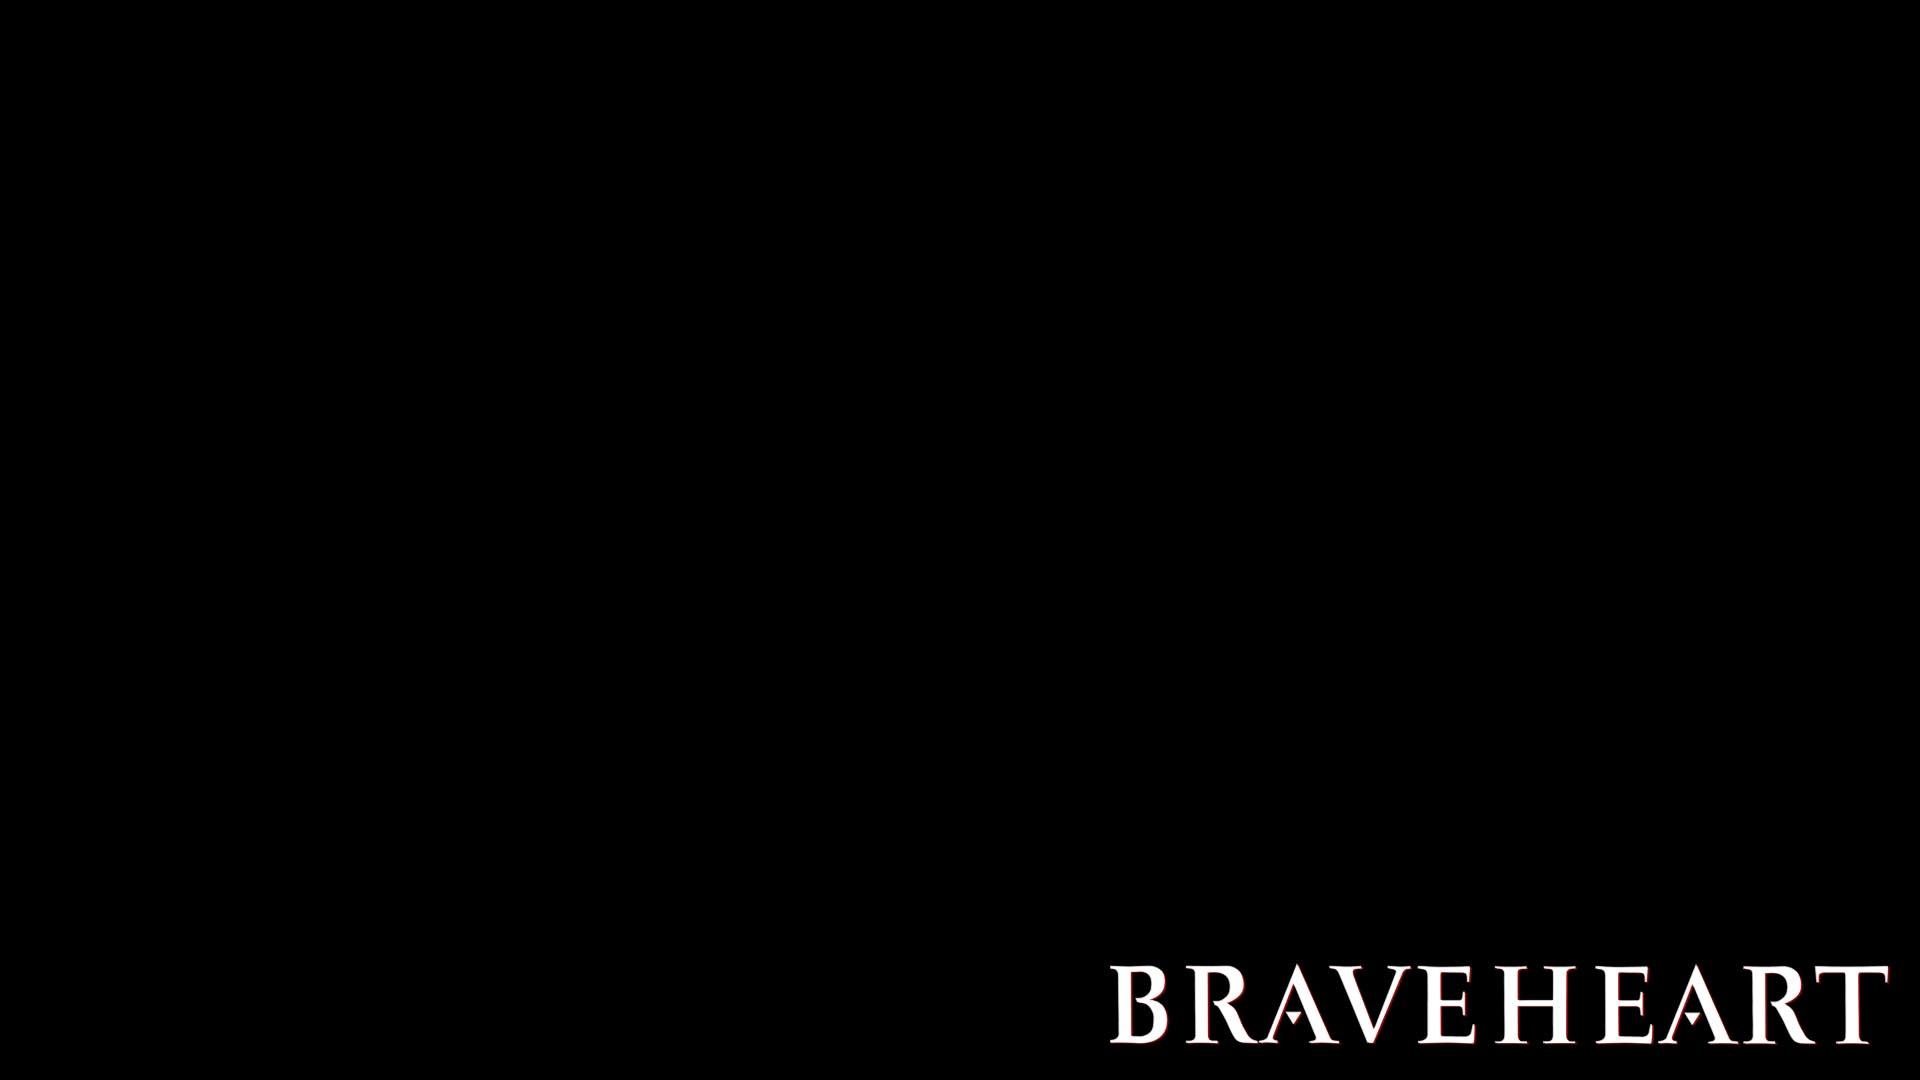 Braveheart Wallpaper HD